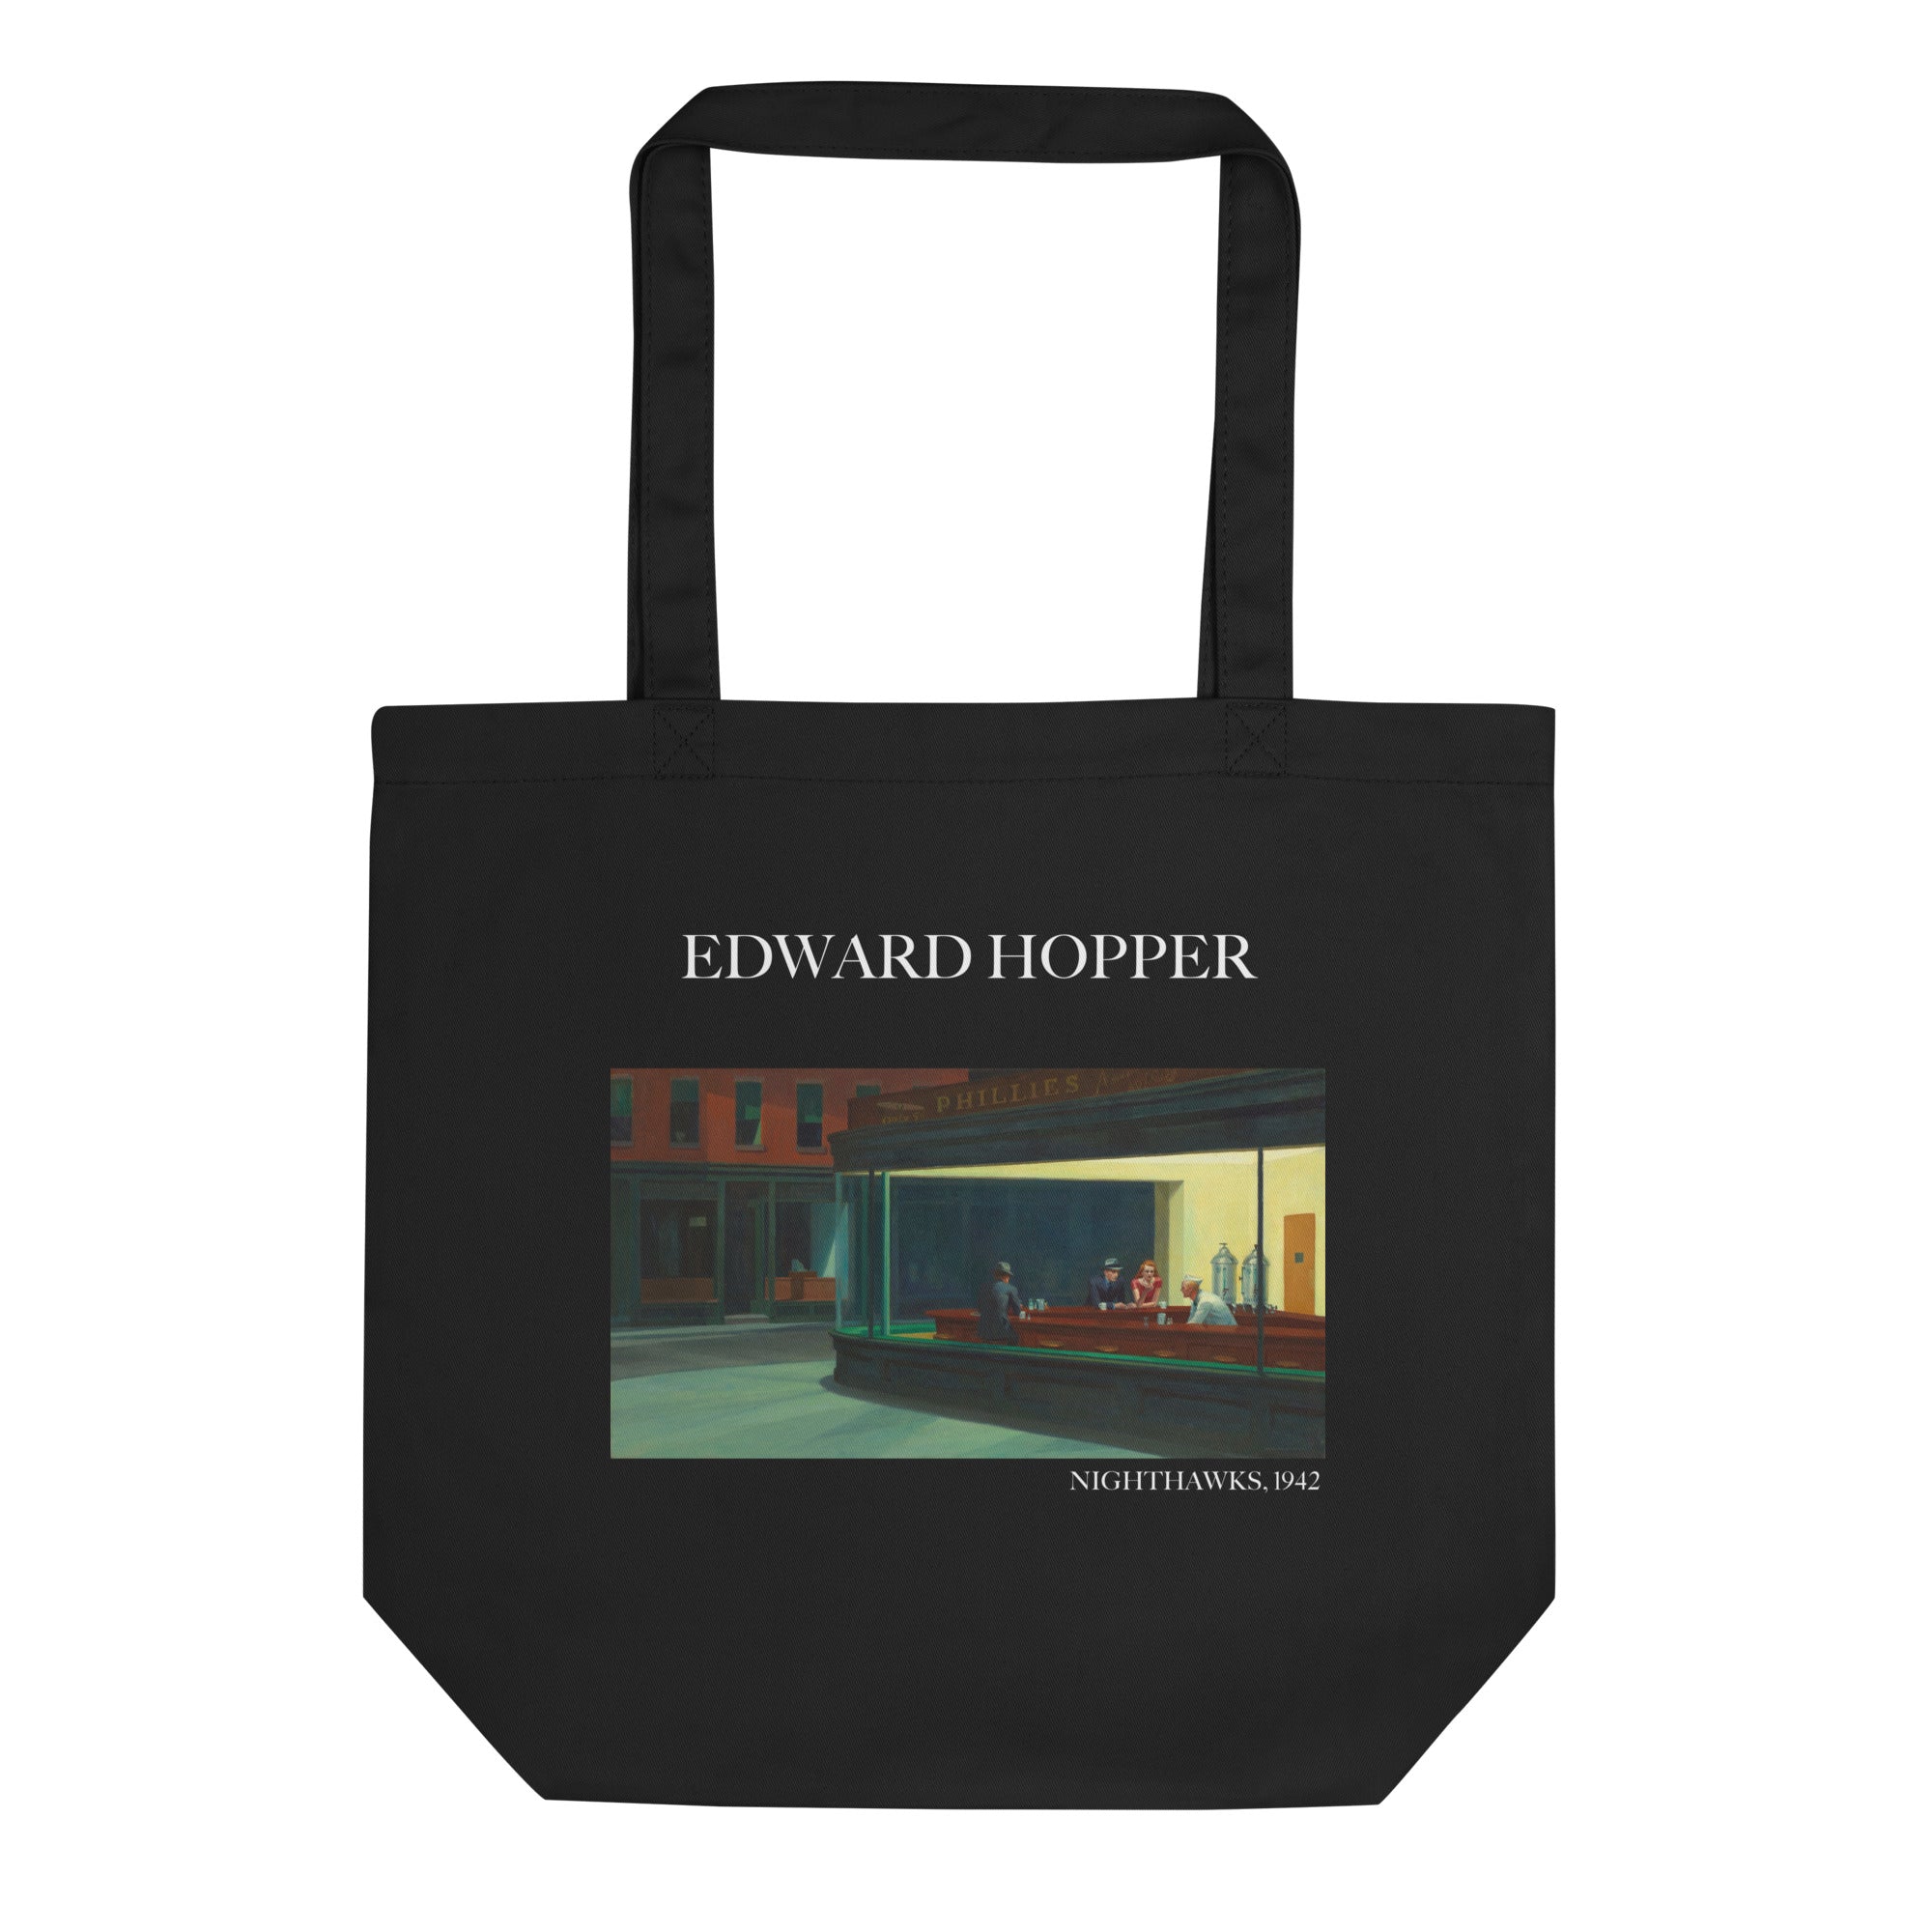 Edward Hopper 'Nighthawks' Famous Painting Totebag | Eco Friendly Art Tote Bag